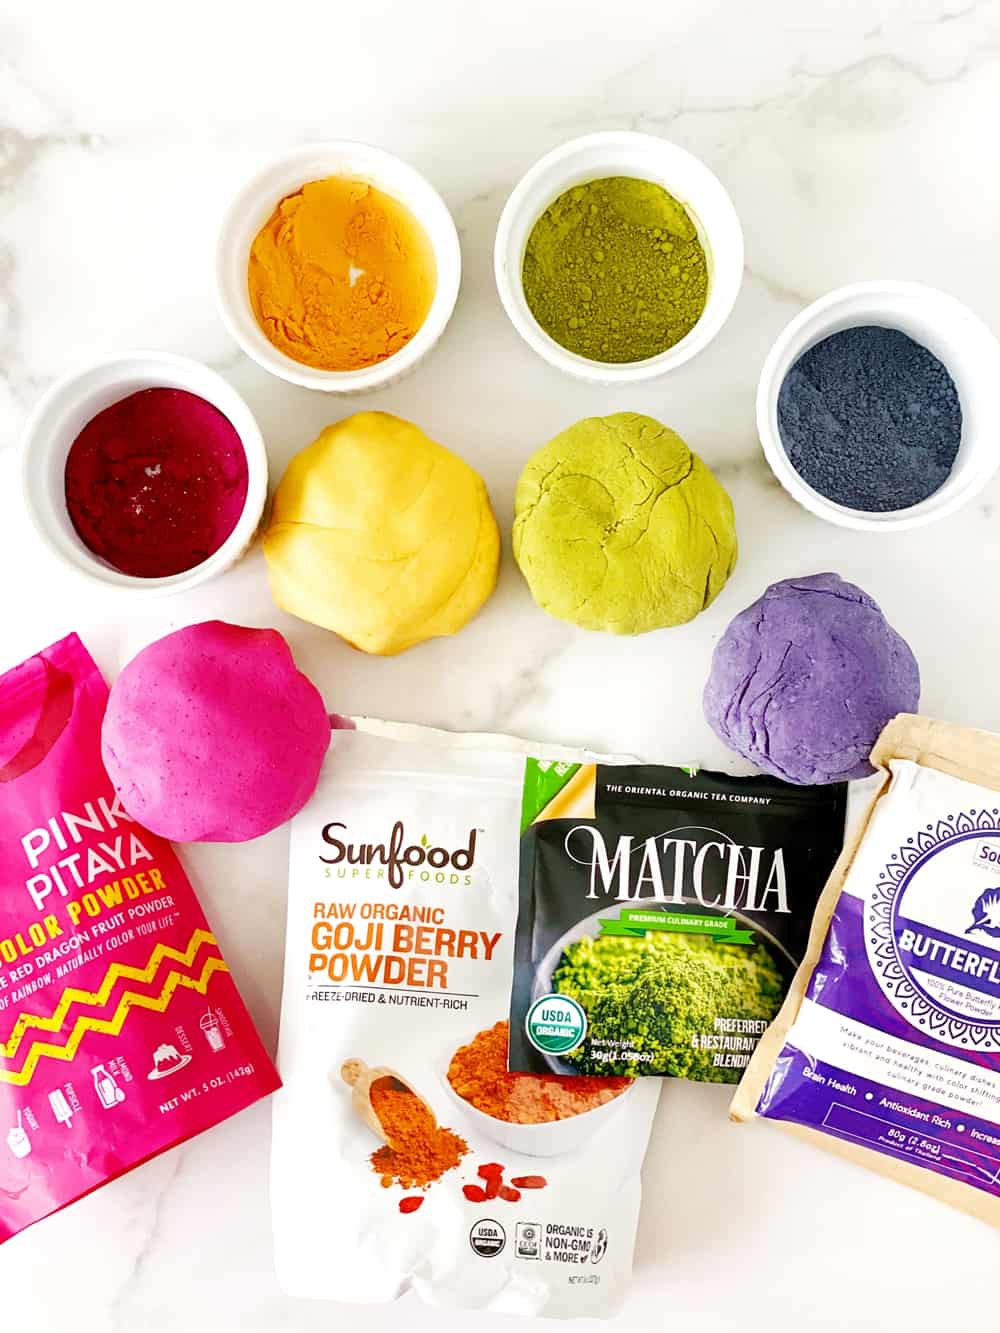 How To Make Homemade Playdough with natural dye - Playtivities